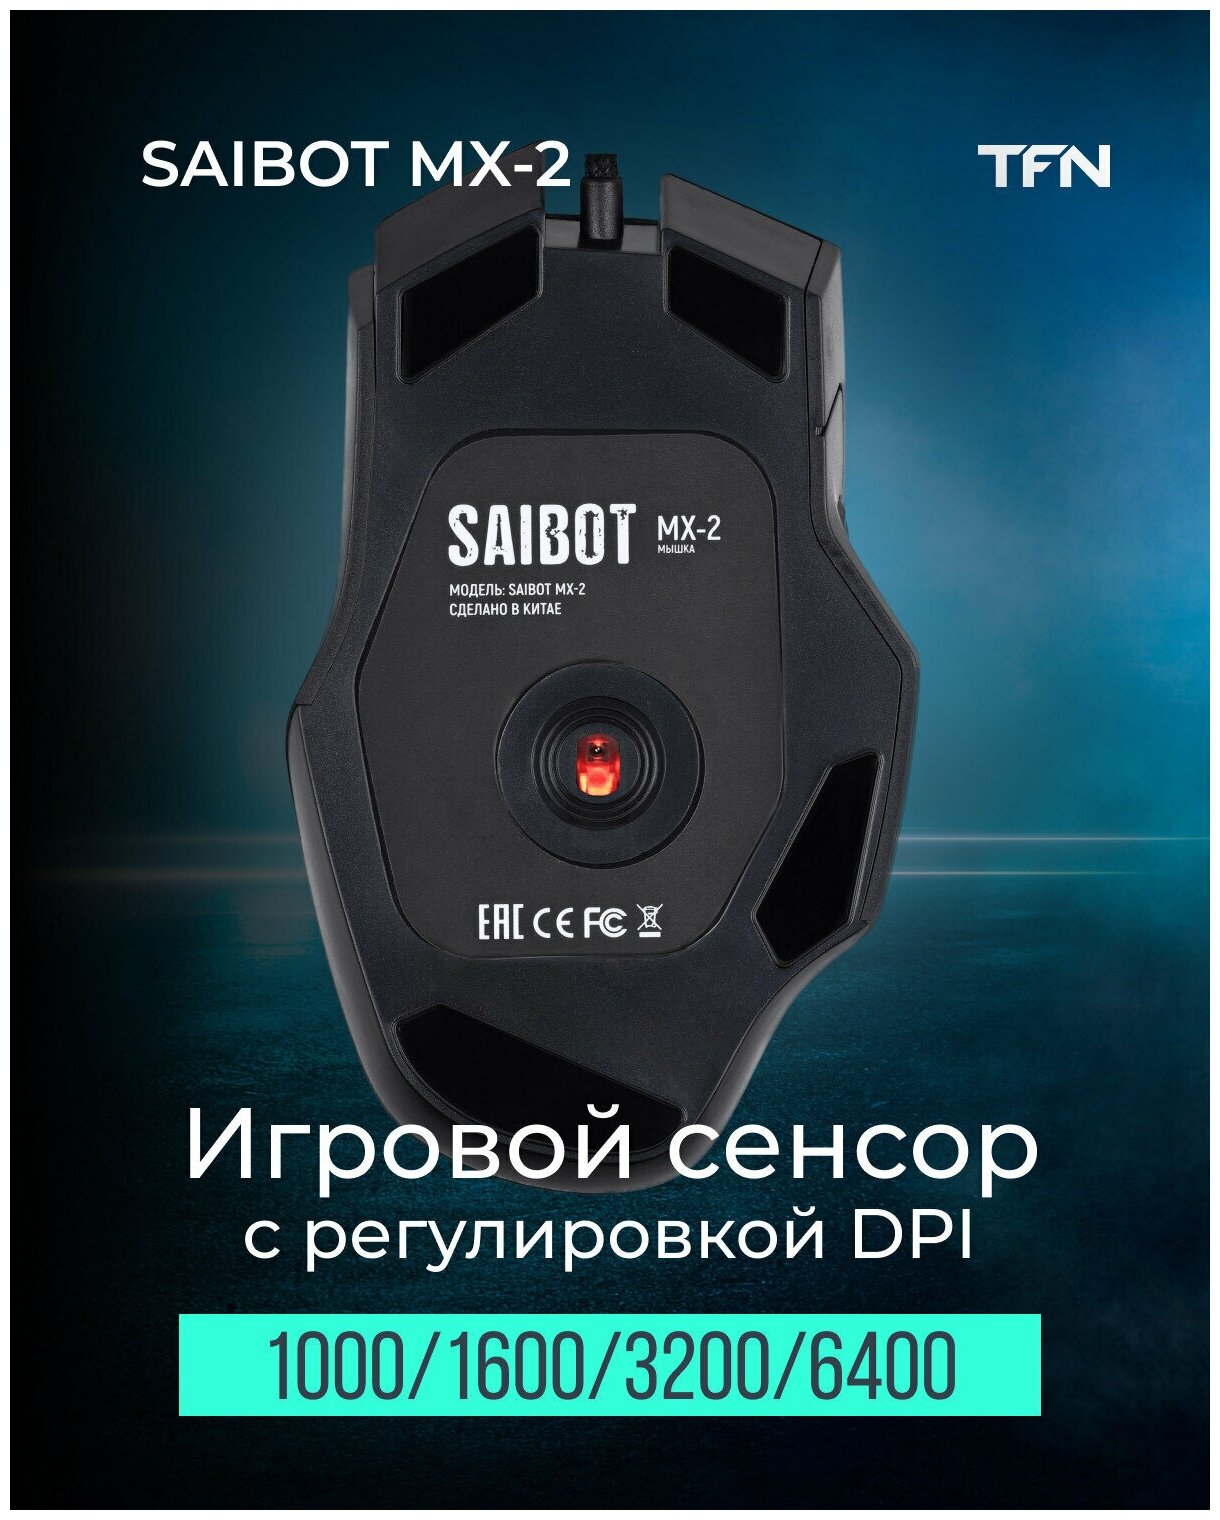 Мышка TFN Saibot MX-2 black